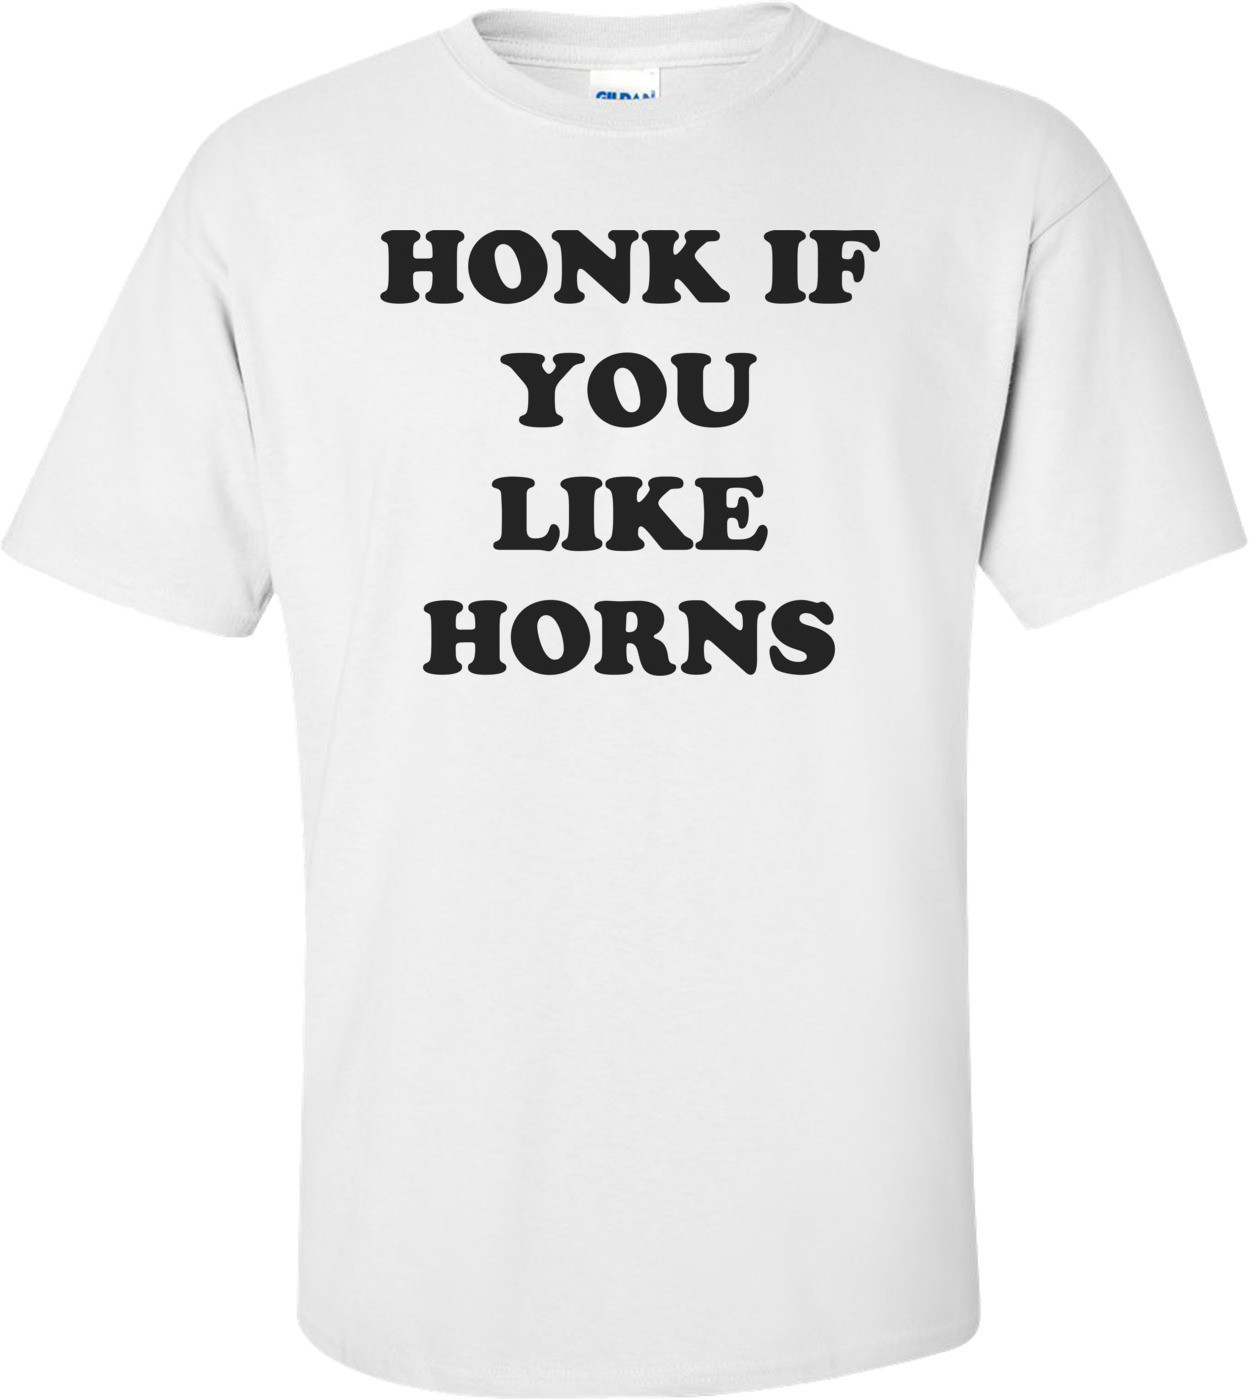 HONK IF YOU LIKE HORNS Shirt